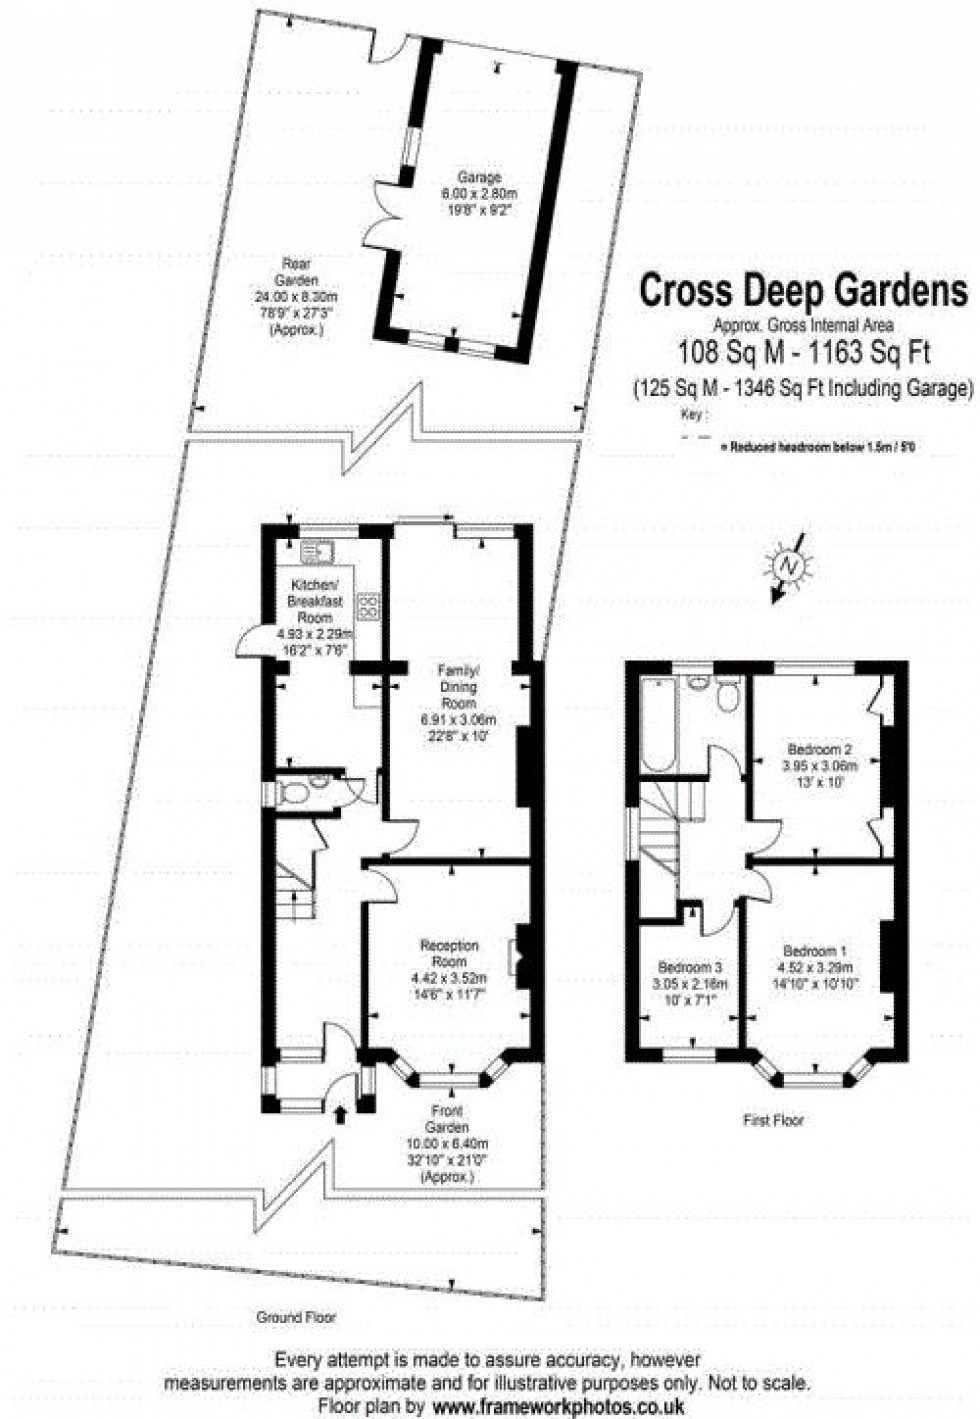 Floorplan for Cross Deep Gardens, Twickenham